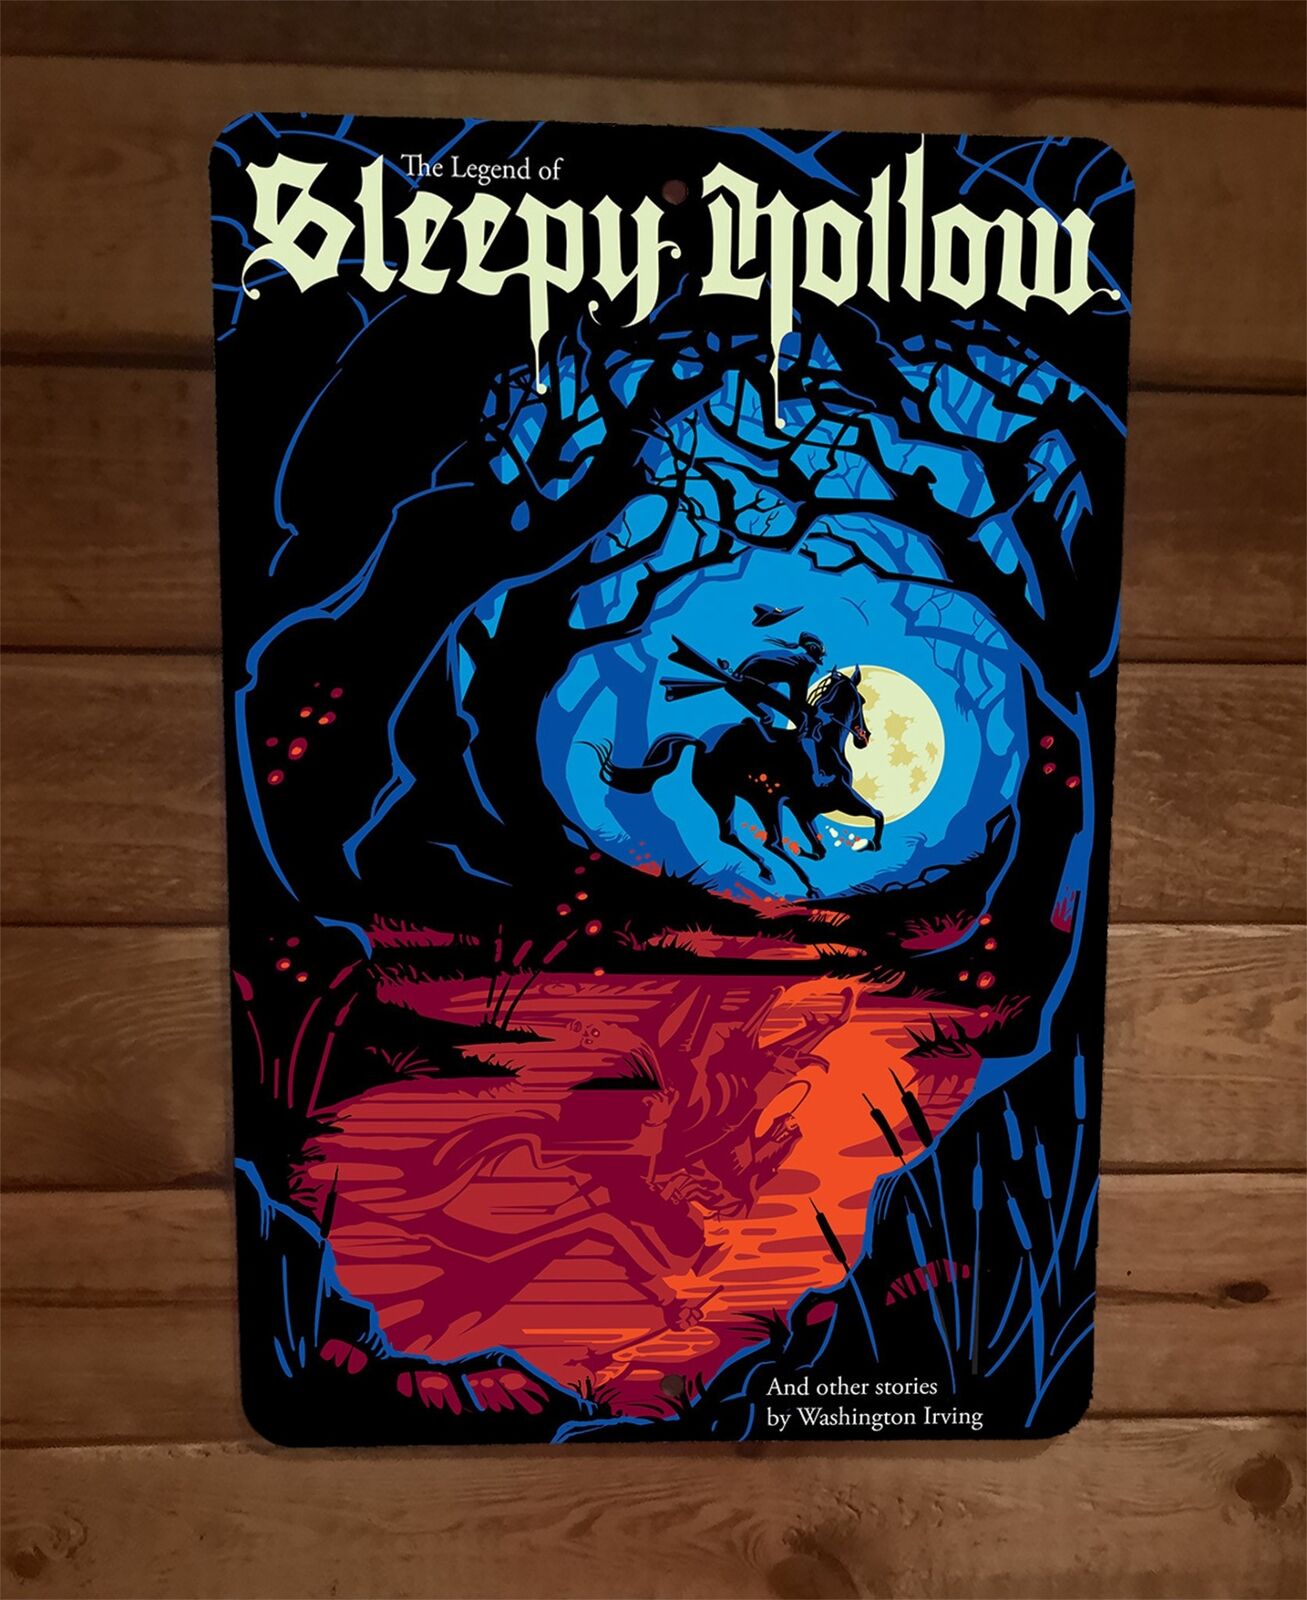 The Legend of Sleepy Hollow Art #1 Halloween Horror 8x12 Metal Wall Sign